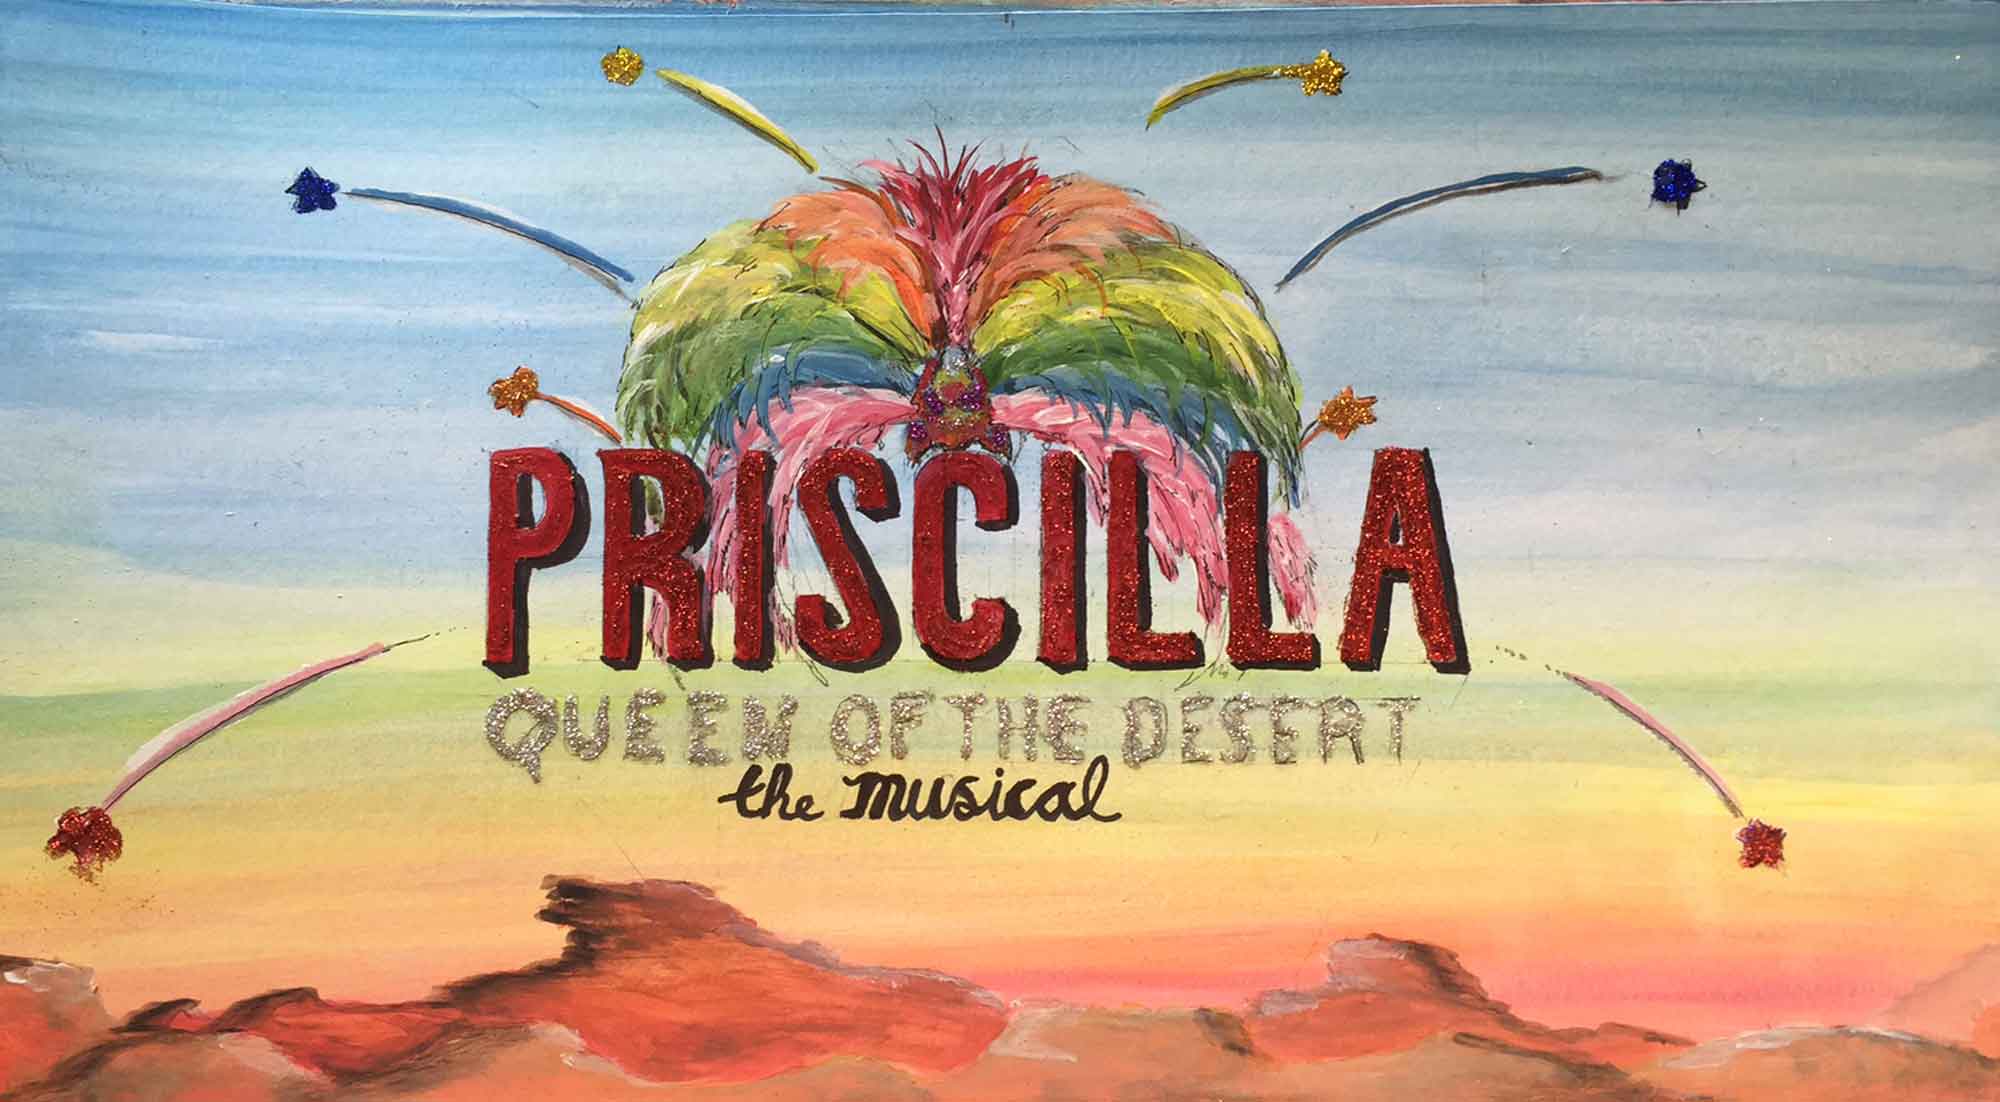 Priscilla Queen of the Desert Set main image